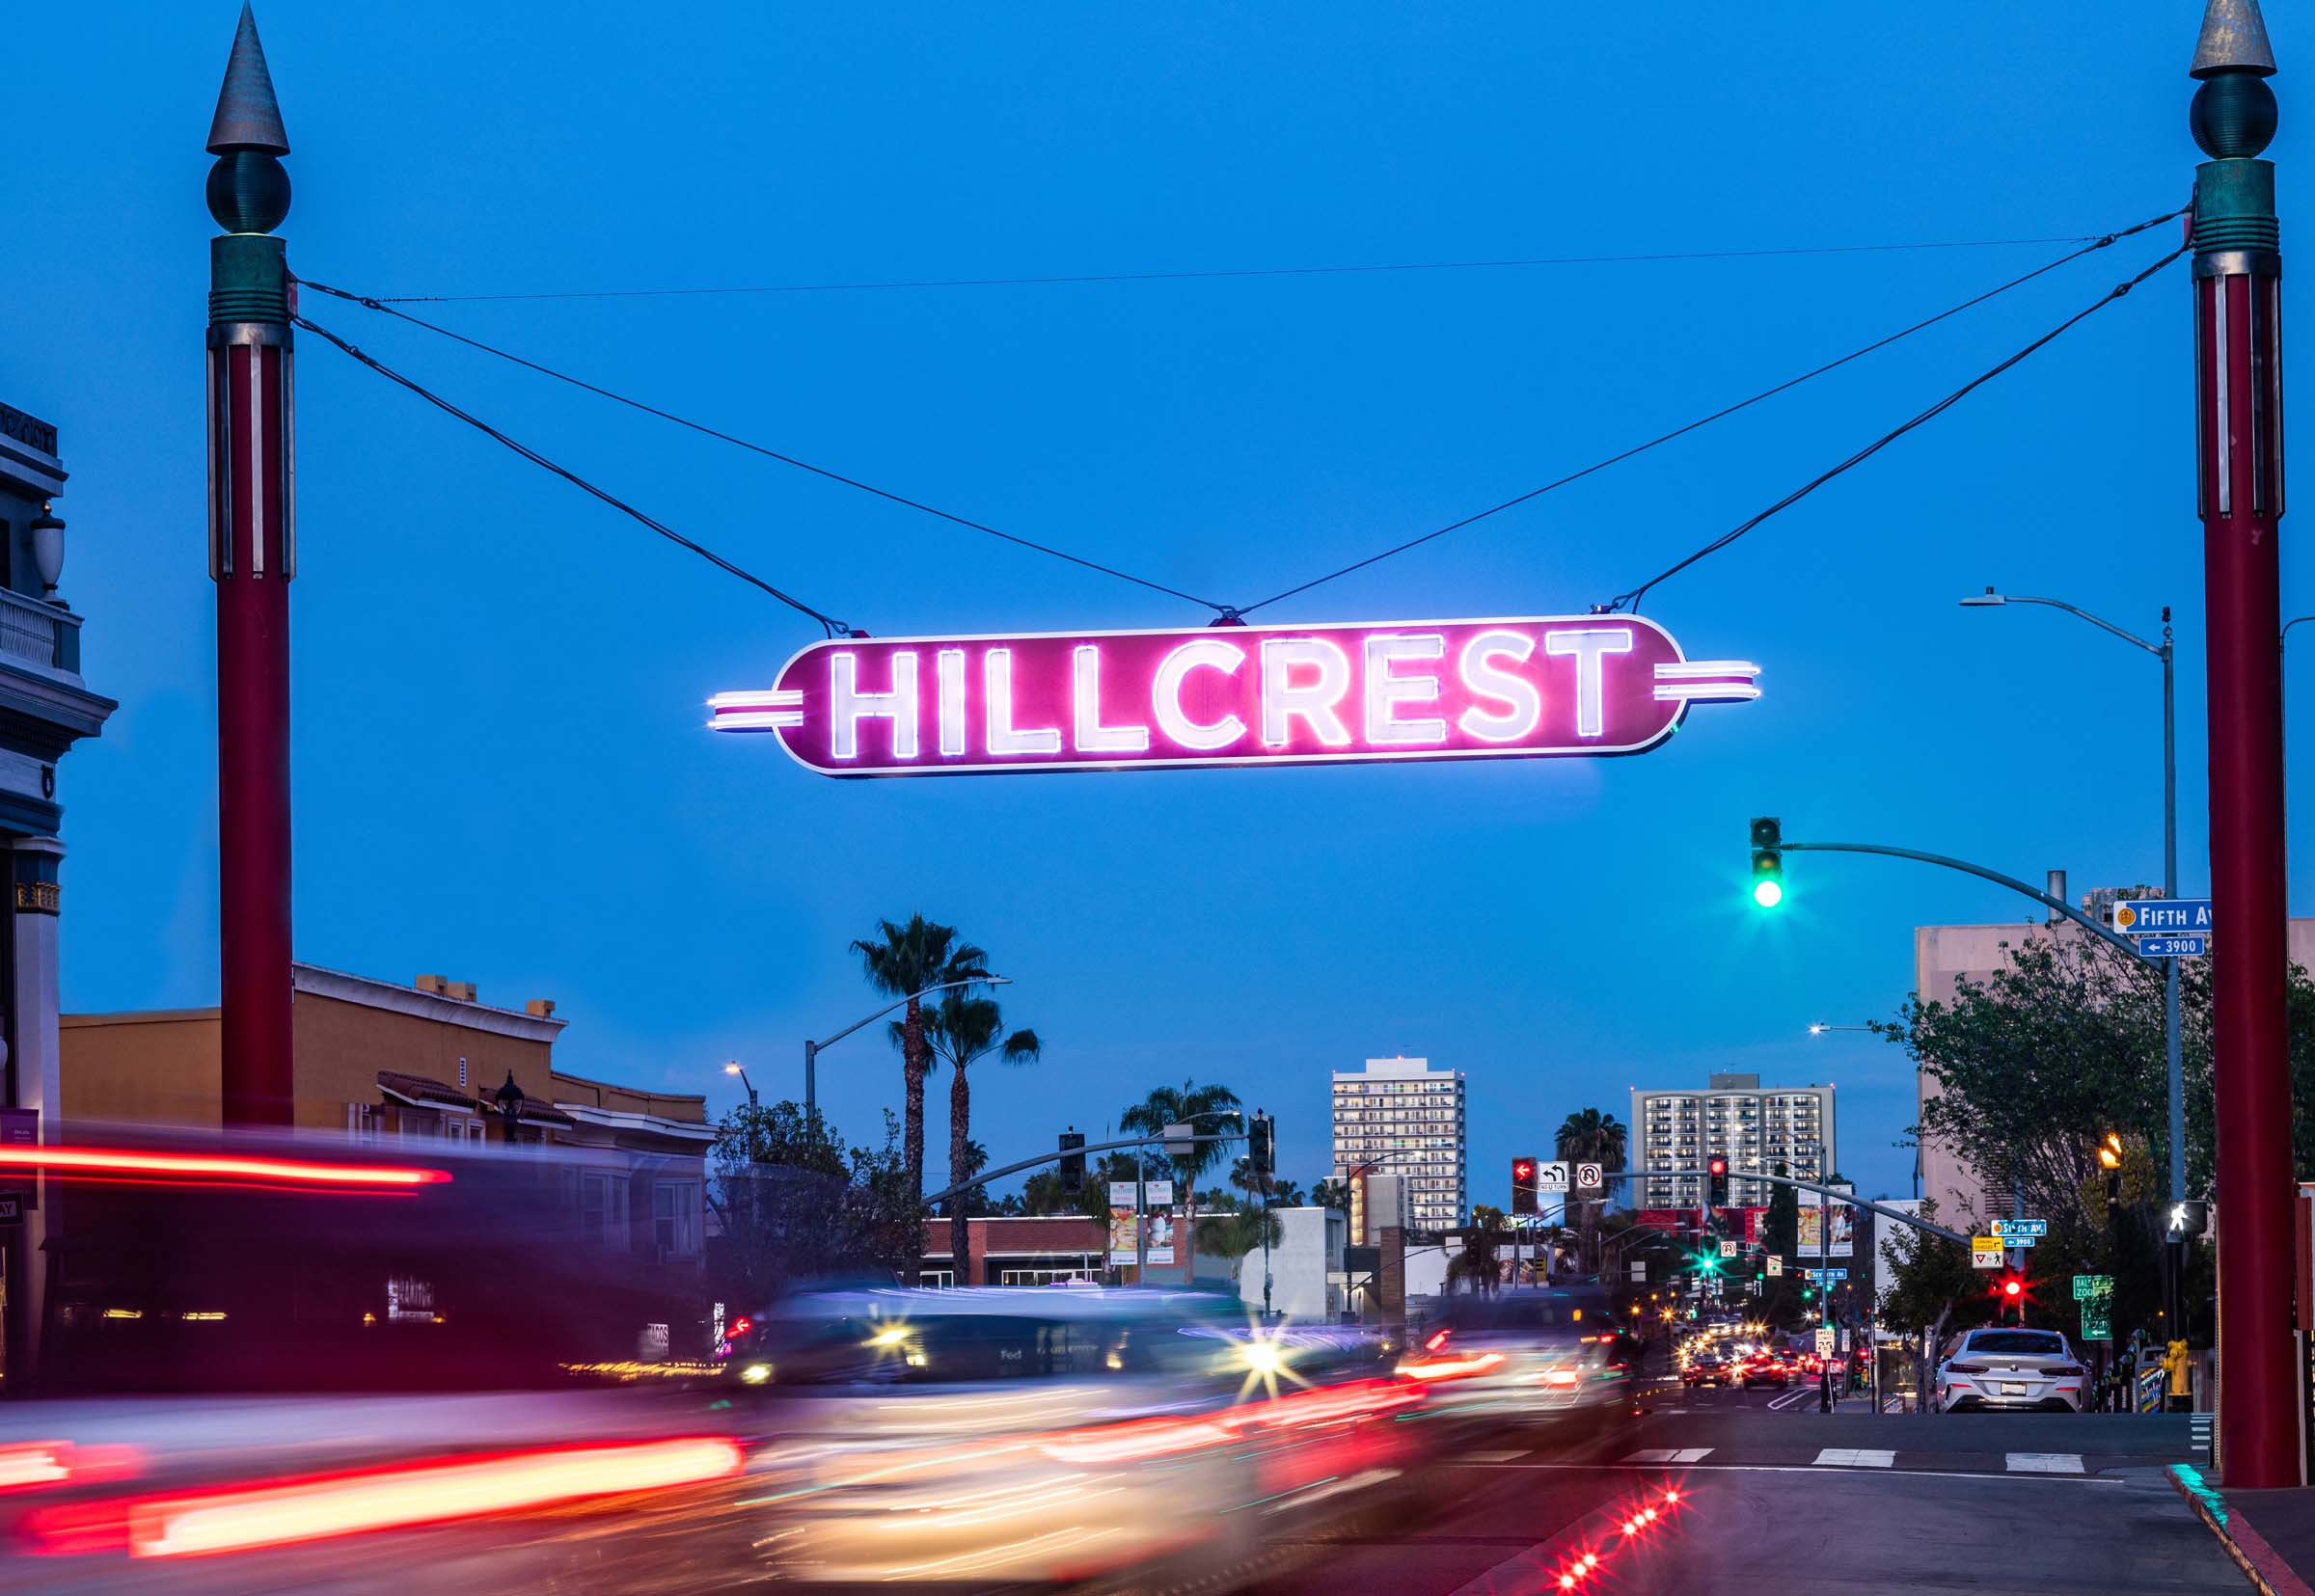 Hillcrest City Sign